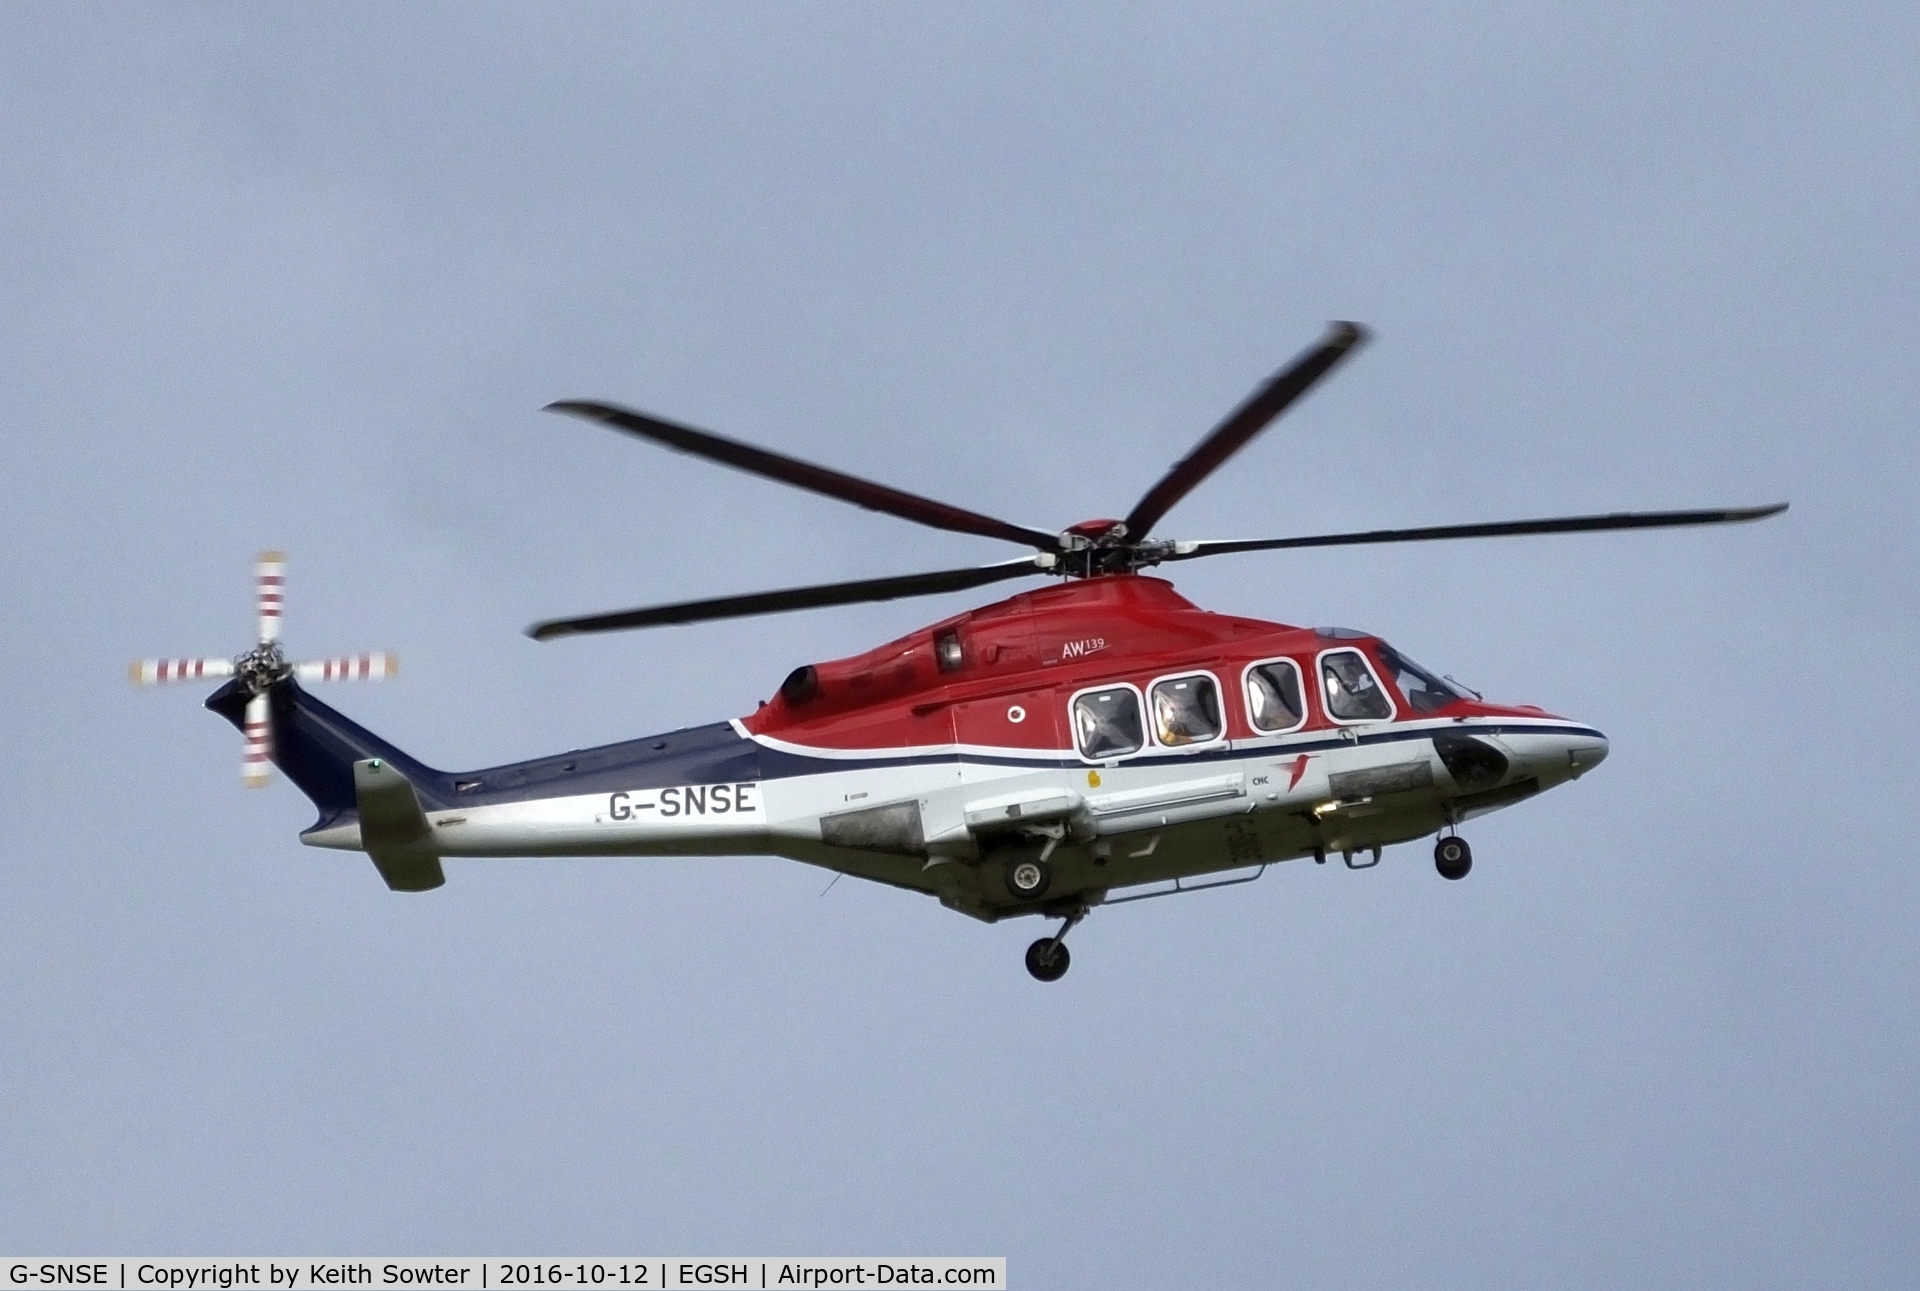 G-SNSE, 2014 AgustaWestland AW-139 C/N 31561, Returning to land